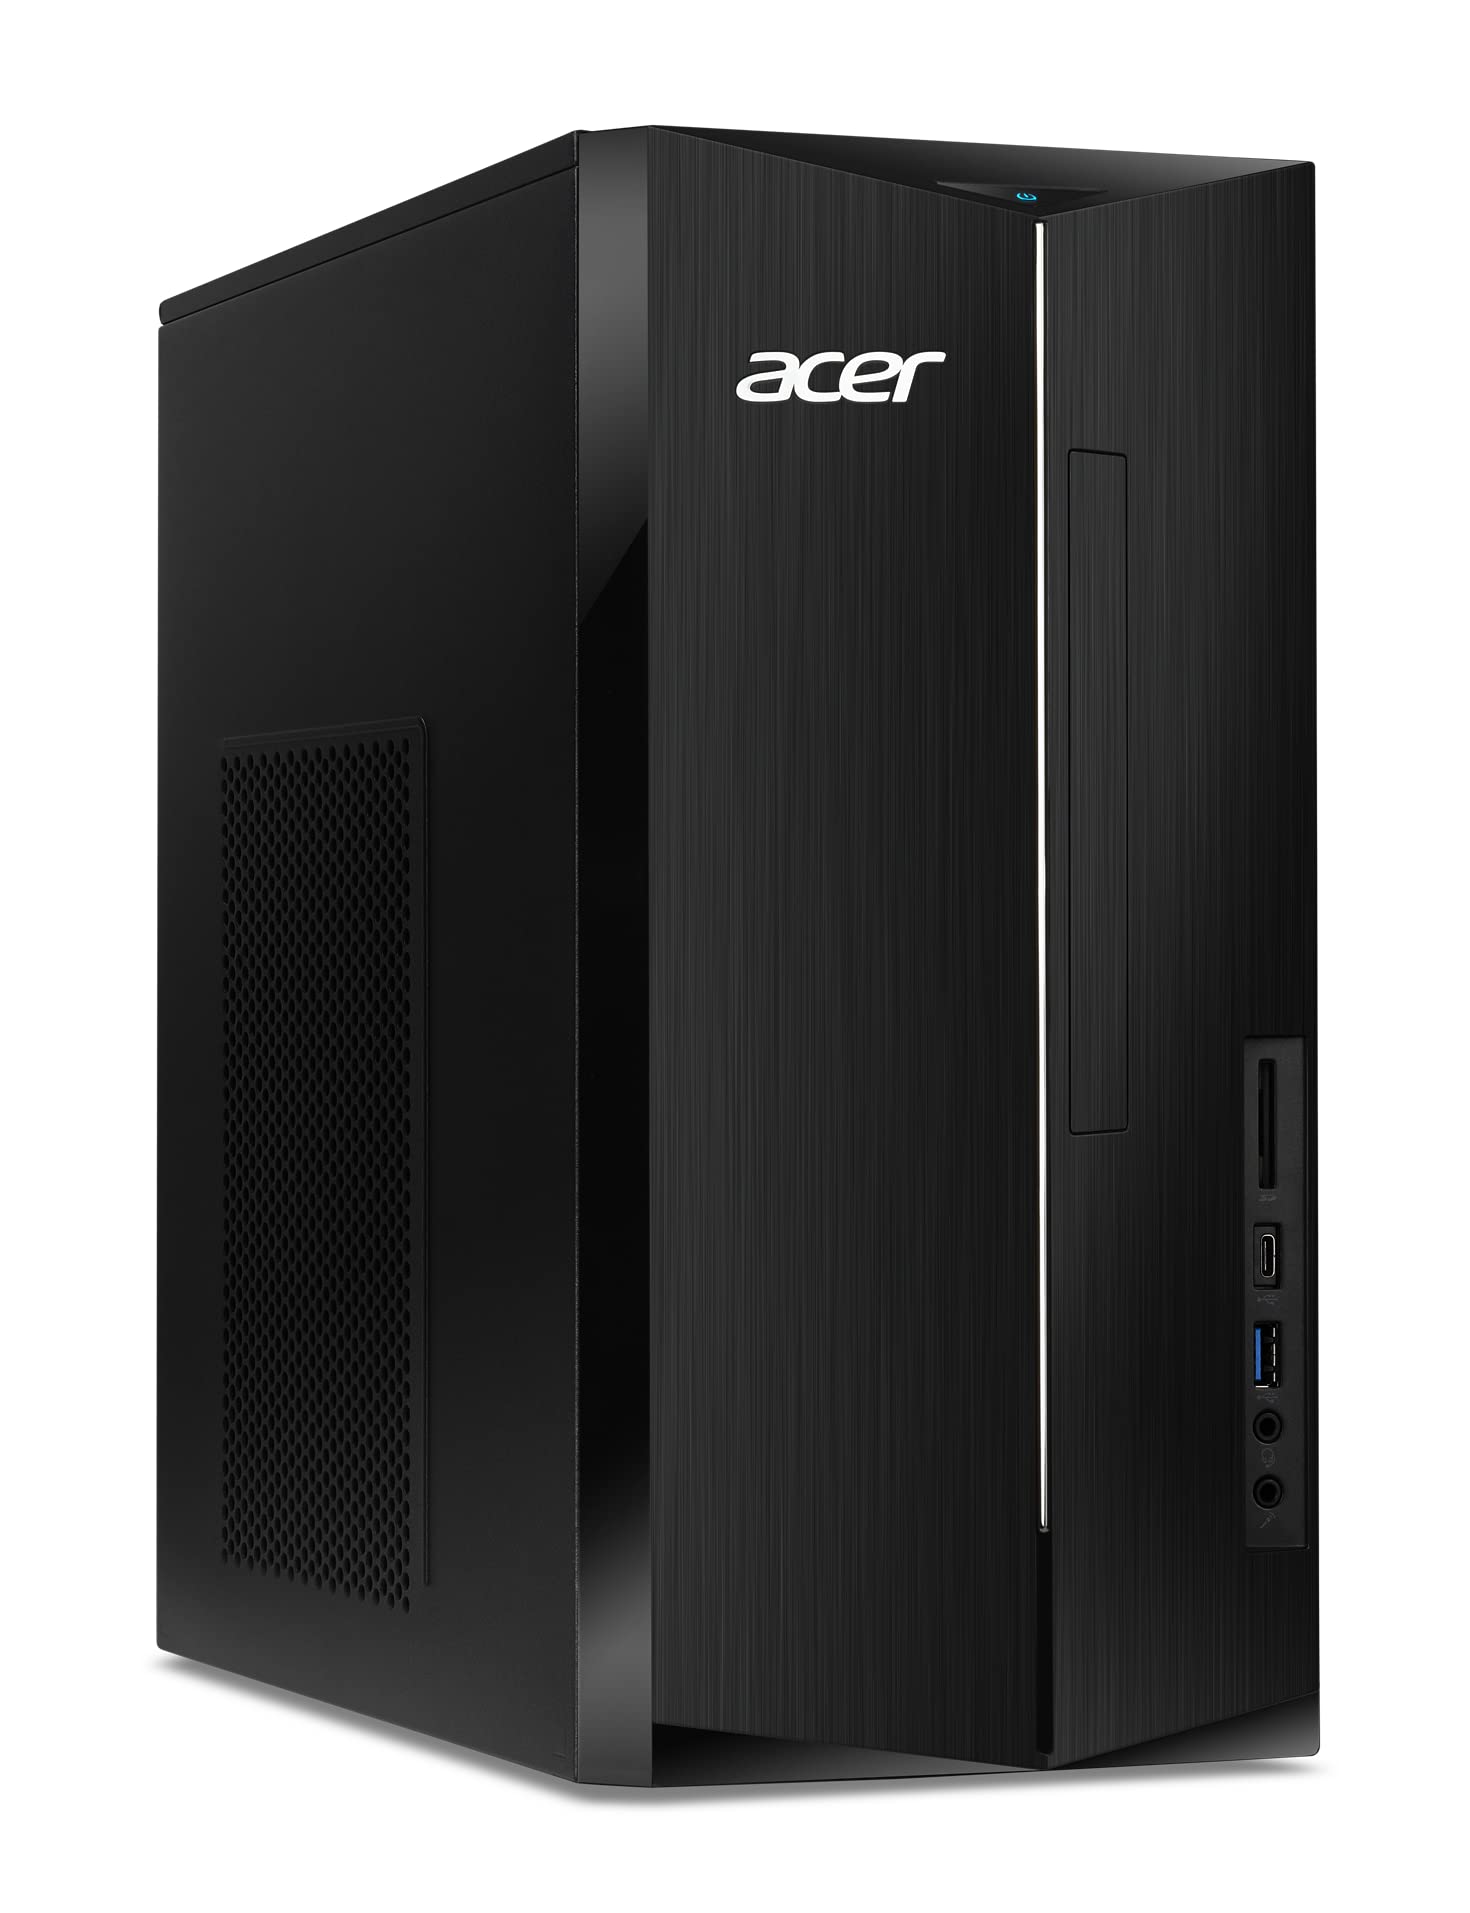 acer Aspire TC-1780-UA92 Desktop | 13th Gen Intel Core i5-13400 10-Core Processor | 8GB 3200MHz DDR4 | 512GB M.2 2280 PCIe Gen 4 SSD | SD Card Reader | Intel Wi-Fi 6E AX211 | Windows 11 Home,Black